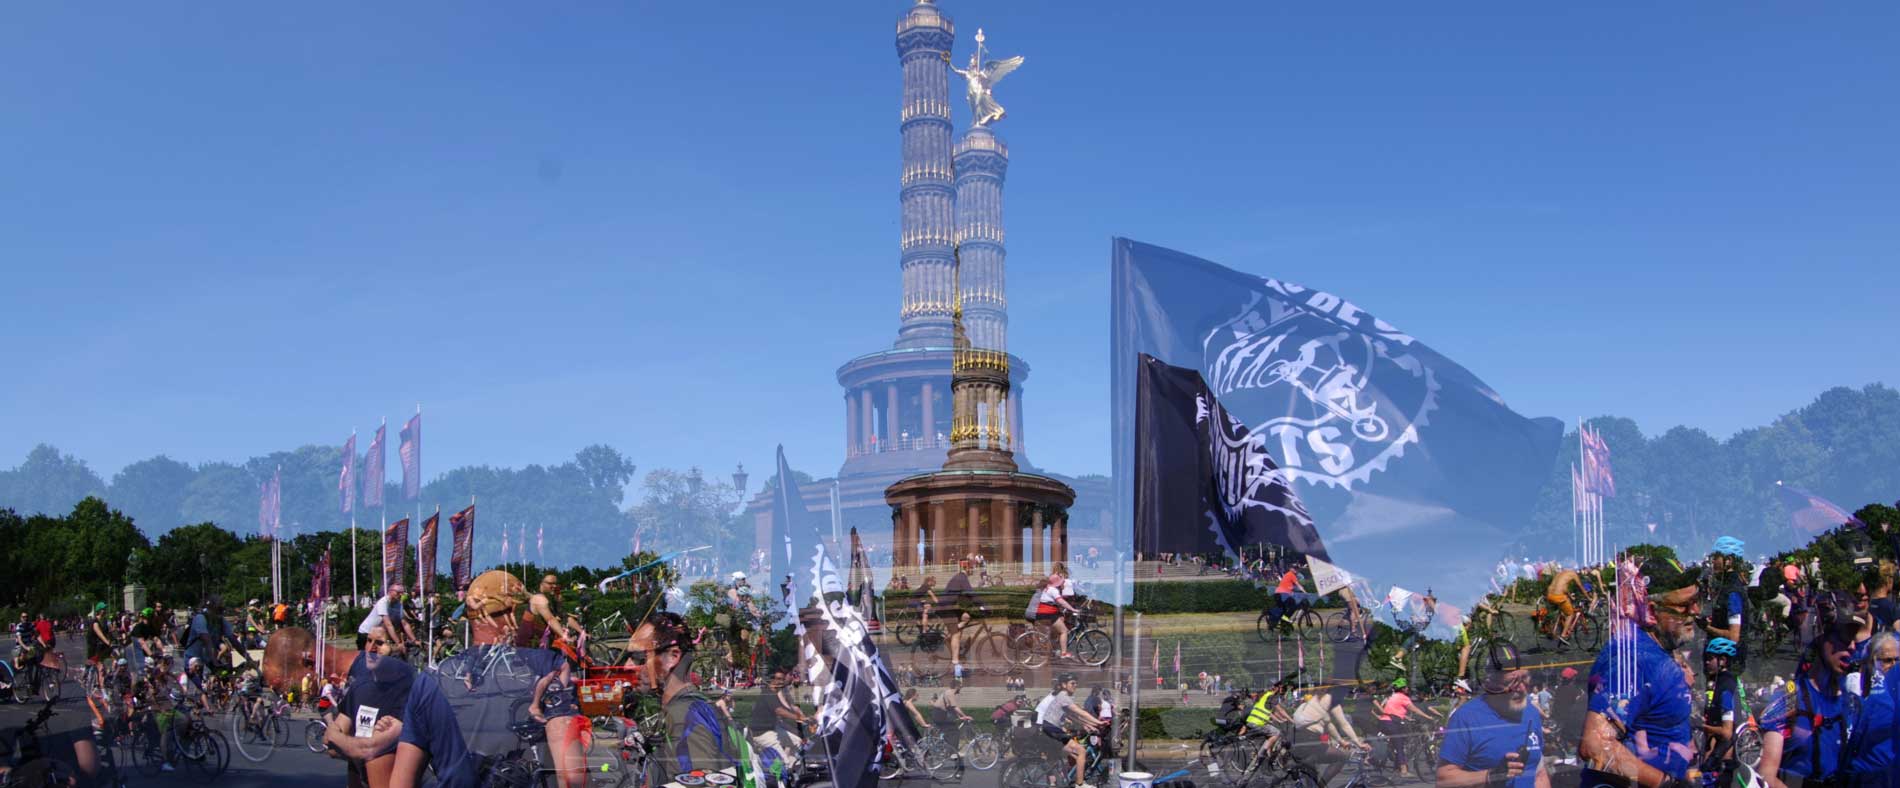 RESPECT CYCLISTS Fahrrad Demo an der Siegessäule